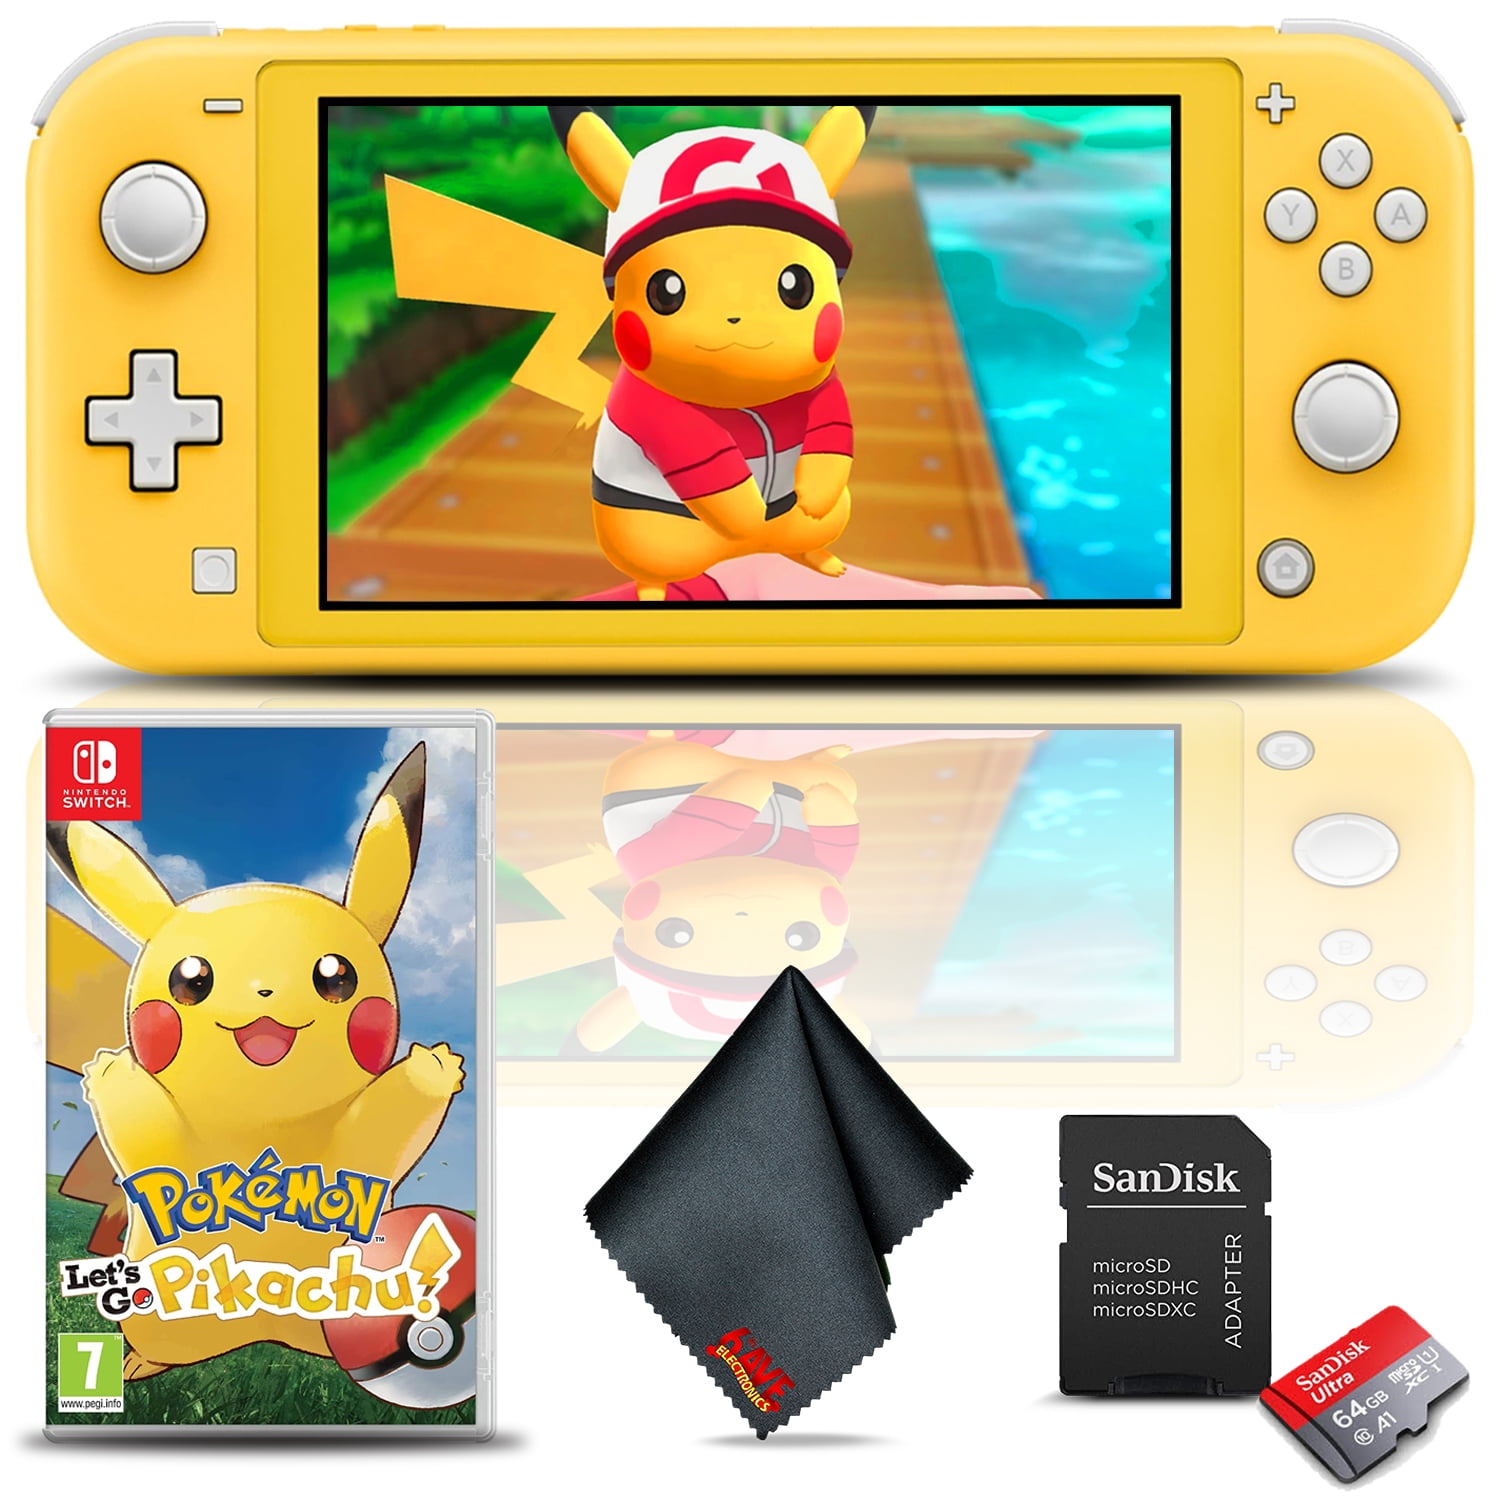 en anden praktisk gå på arbejde Nintendo Switch Lite (Yellow) with Pokemon: Let's Go Pikachu and 64GB  microSD - Walmart.com